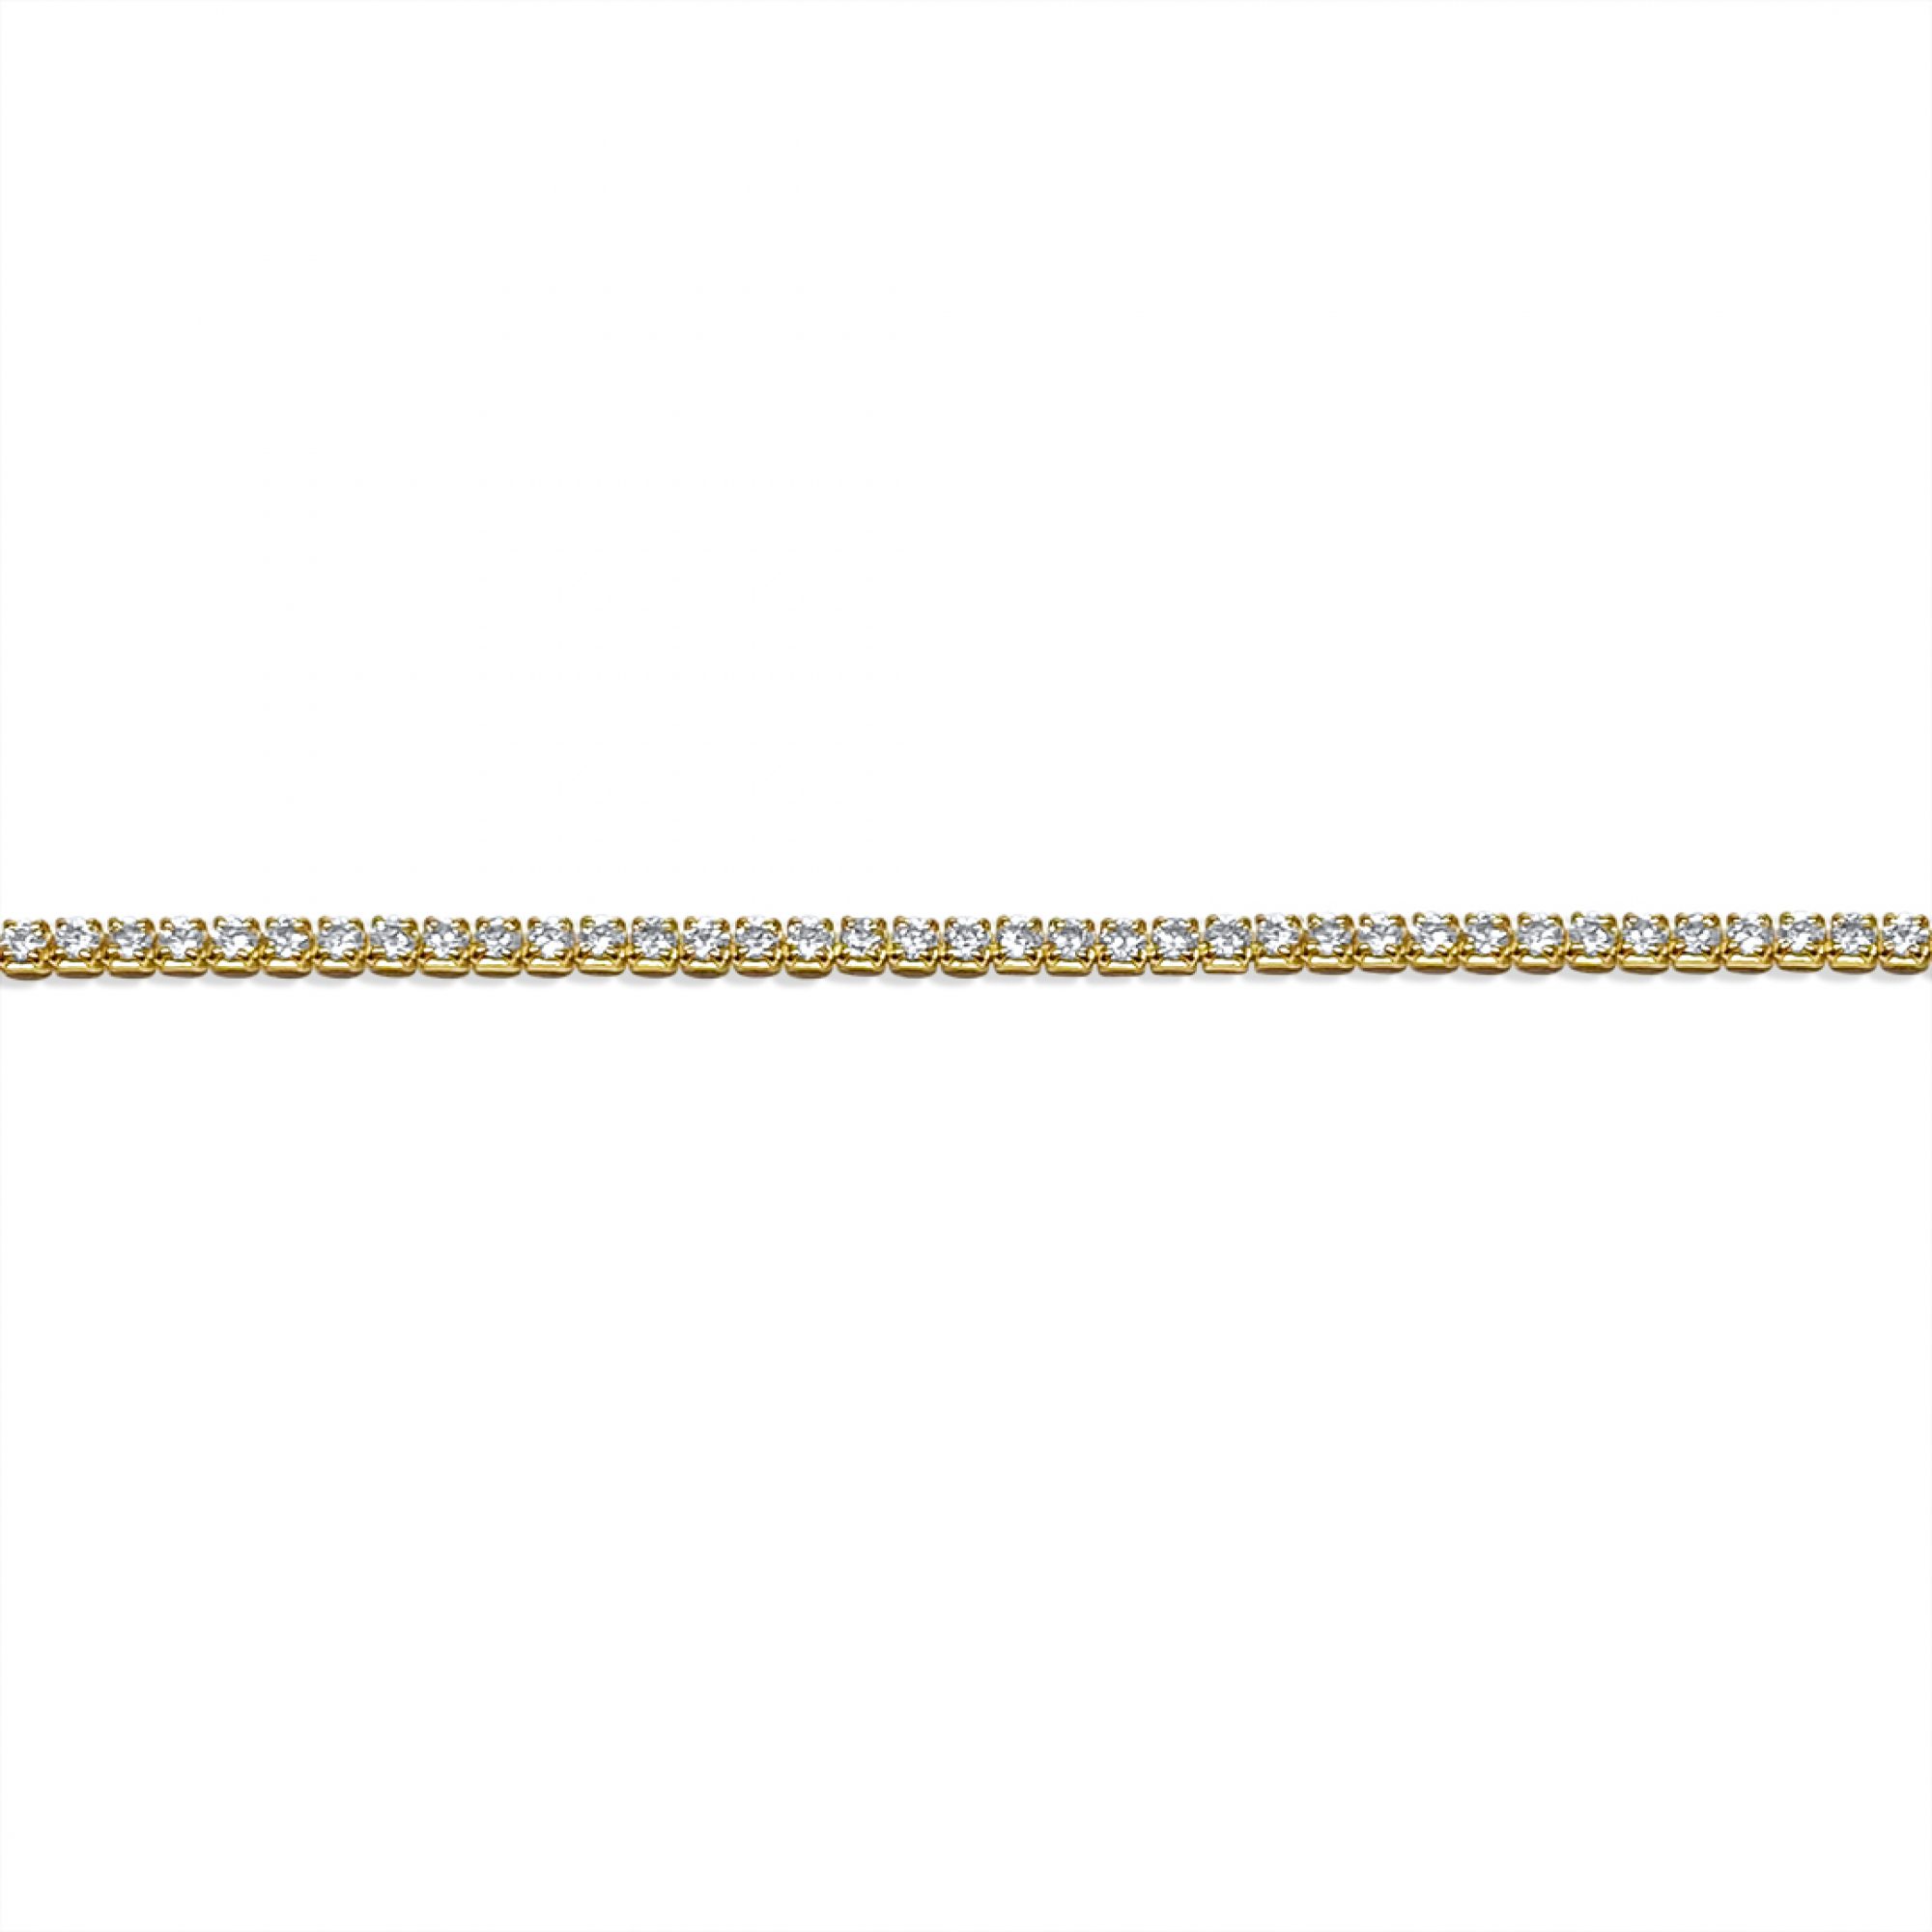 Gold plated bracelet with zircon stones